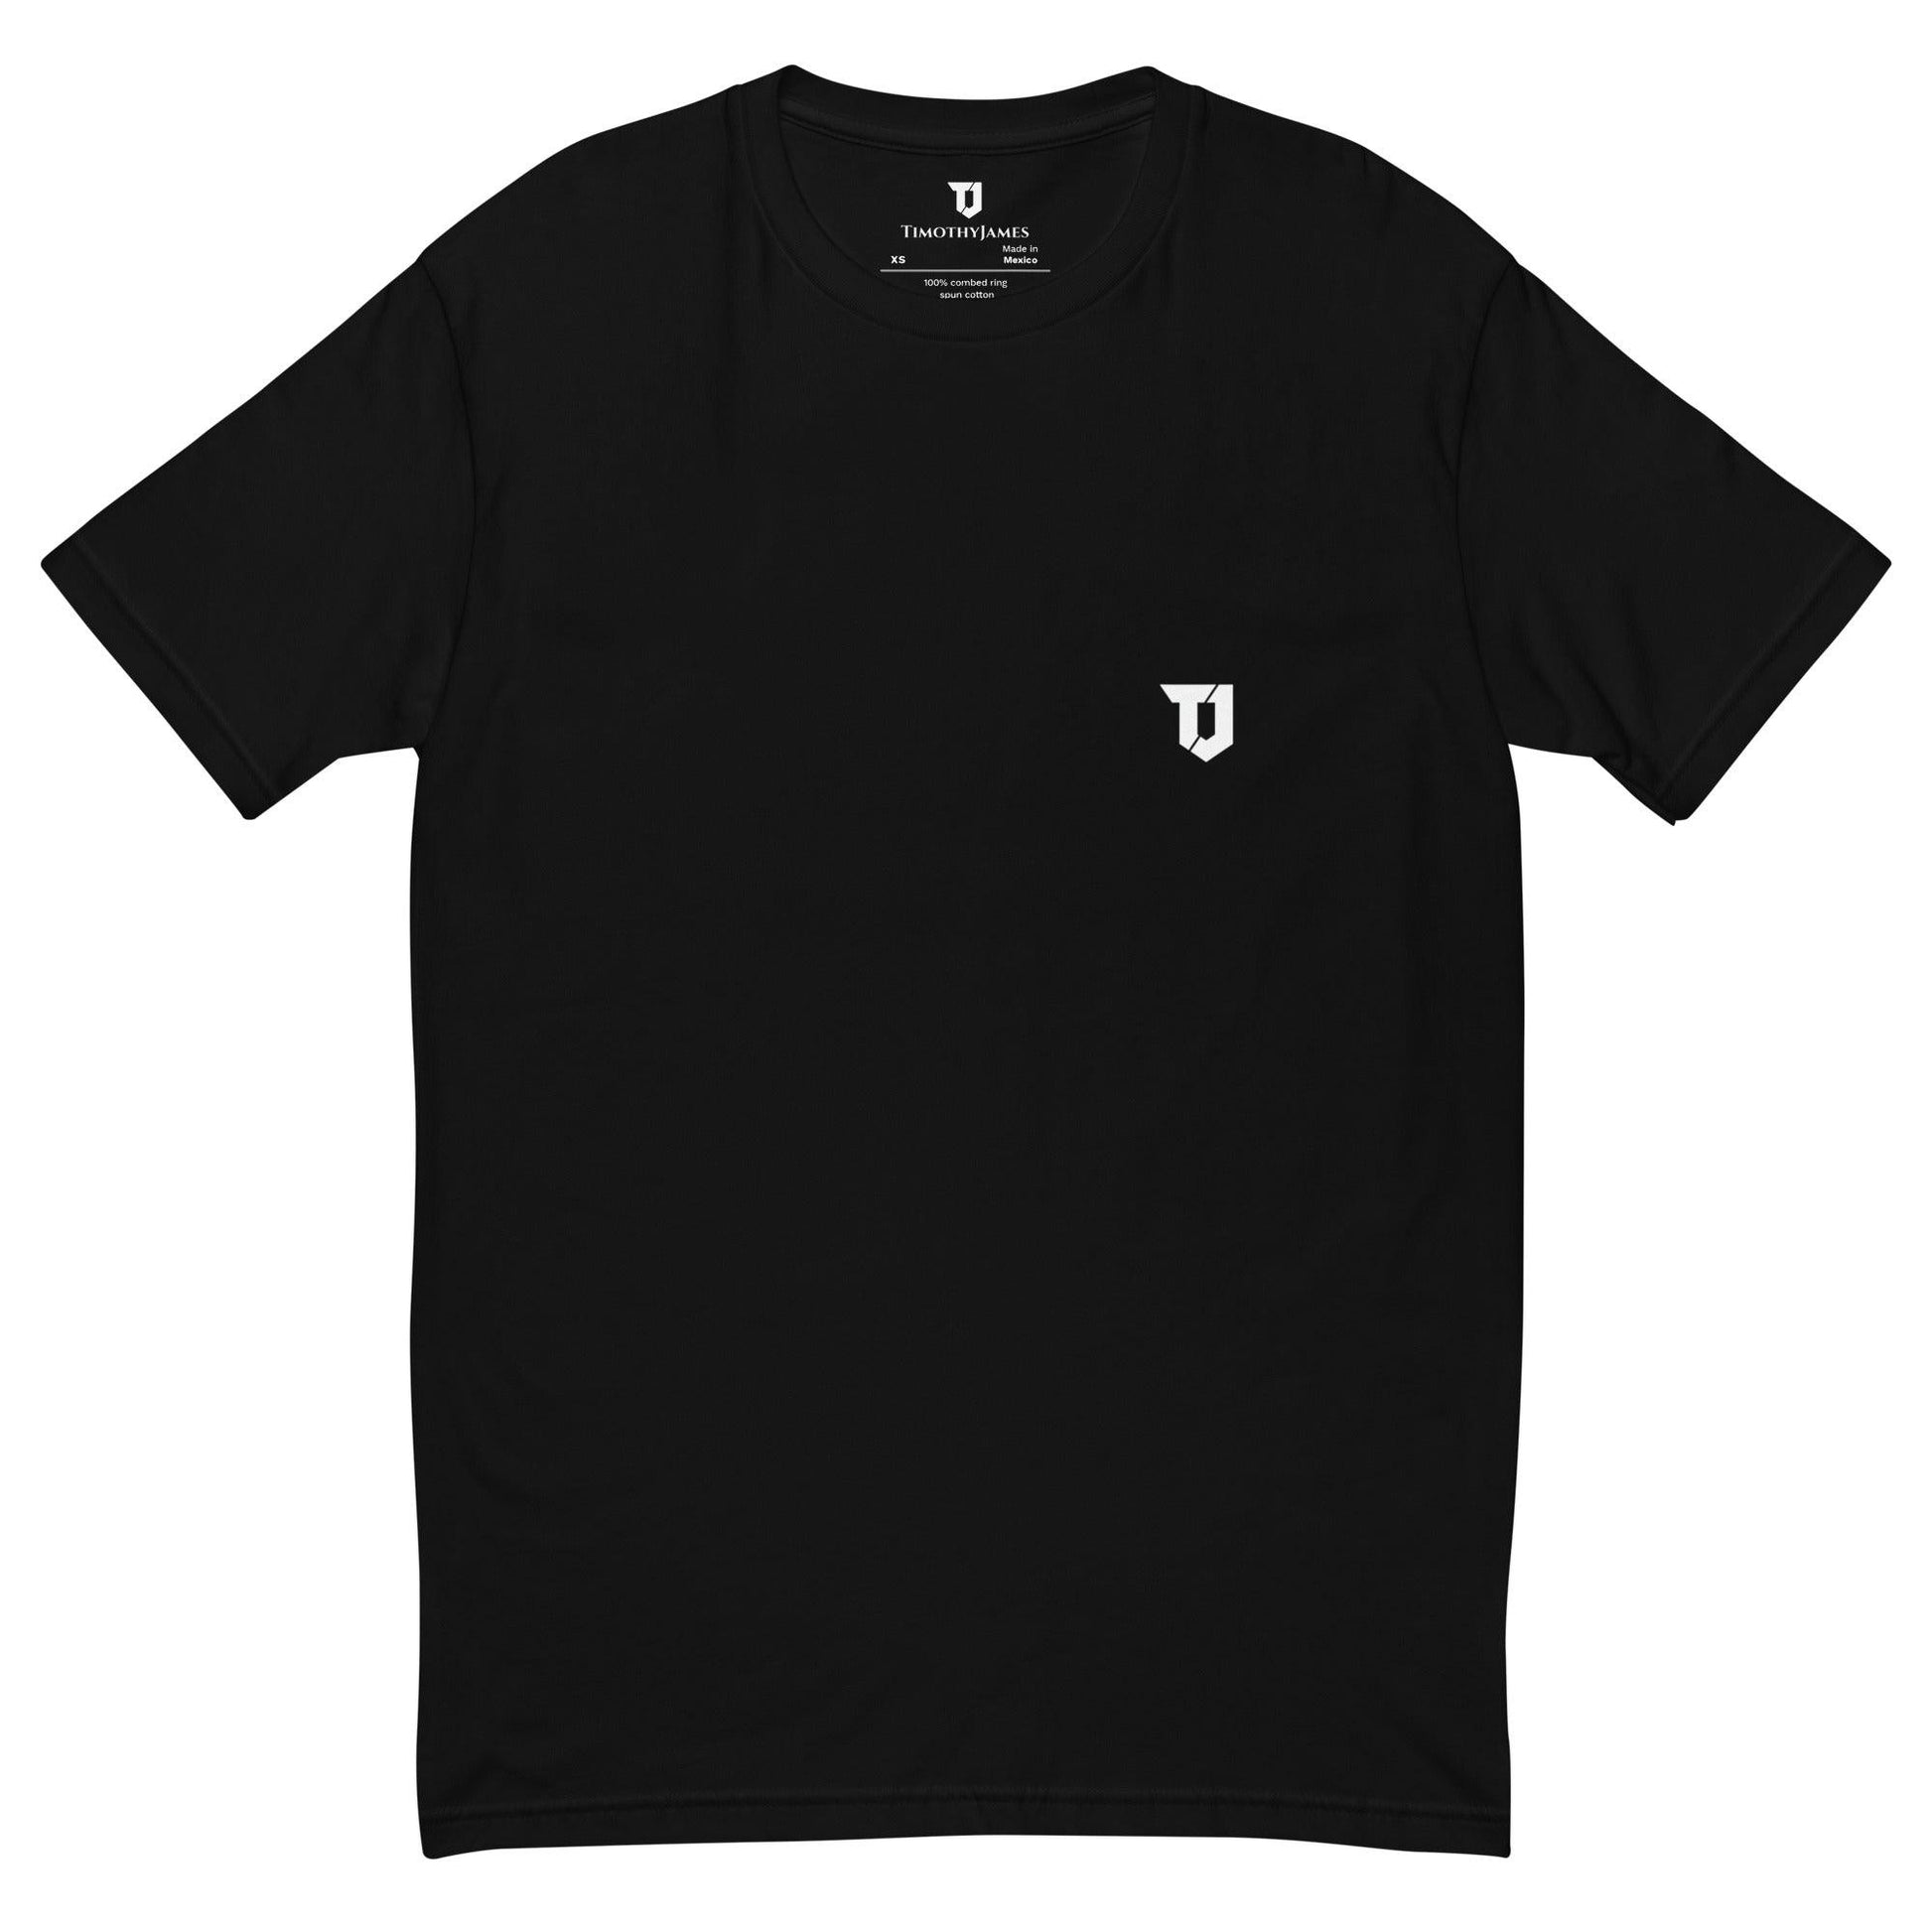 TimothyJames Coordinates T-Shirt Black - TimothyJames